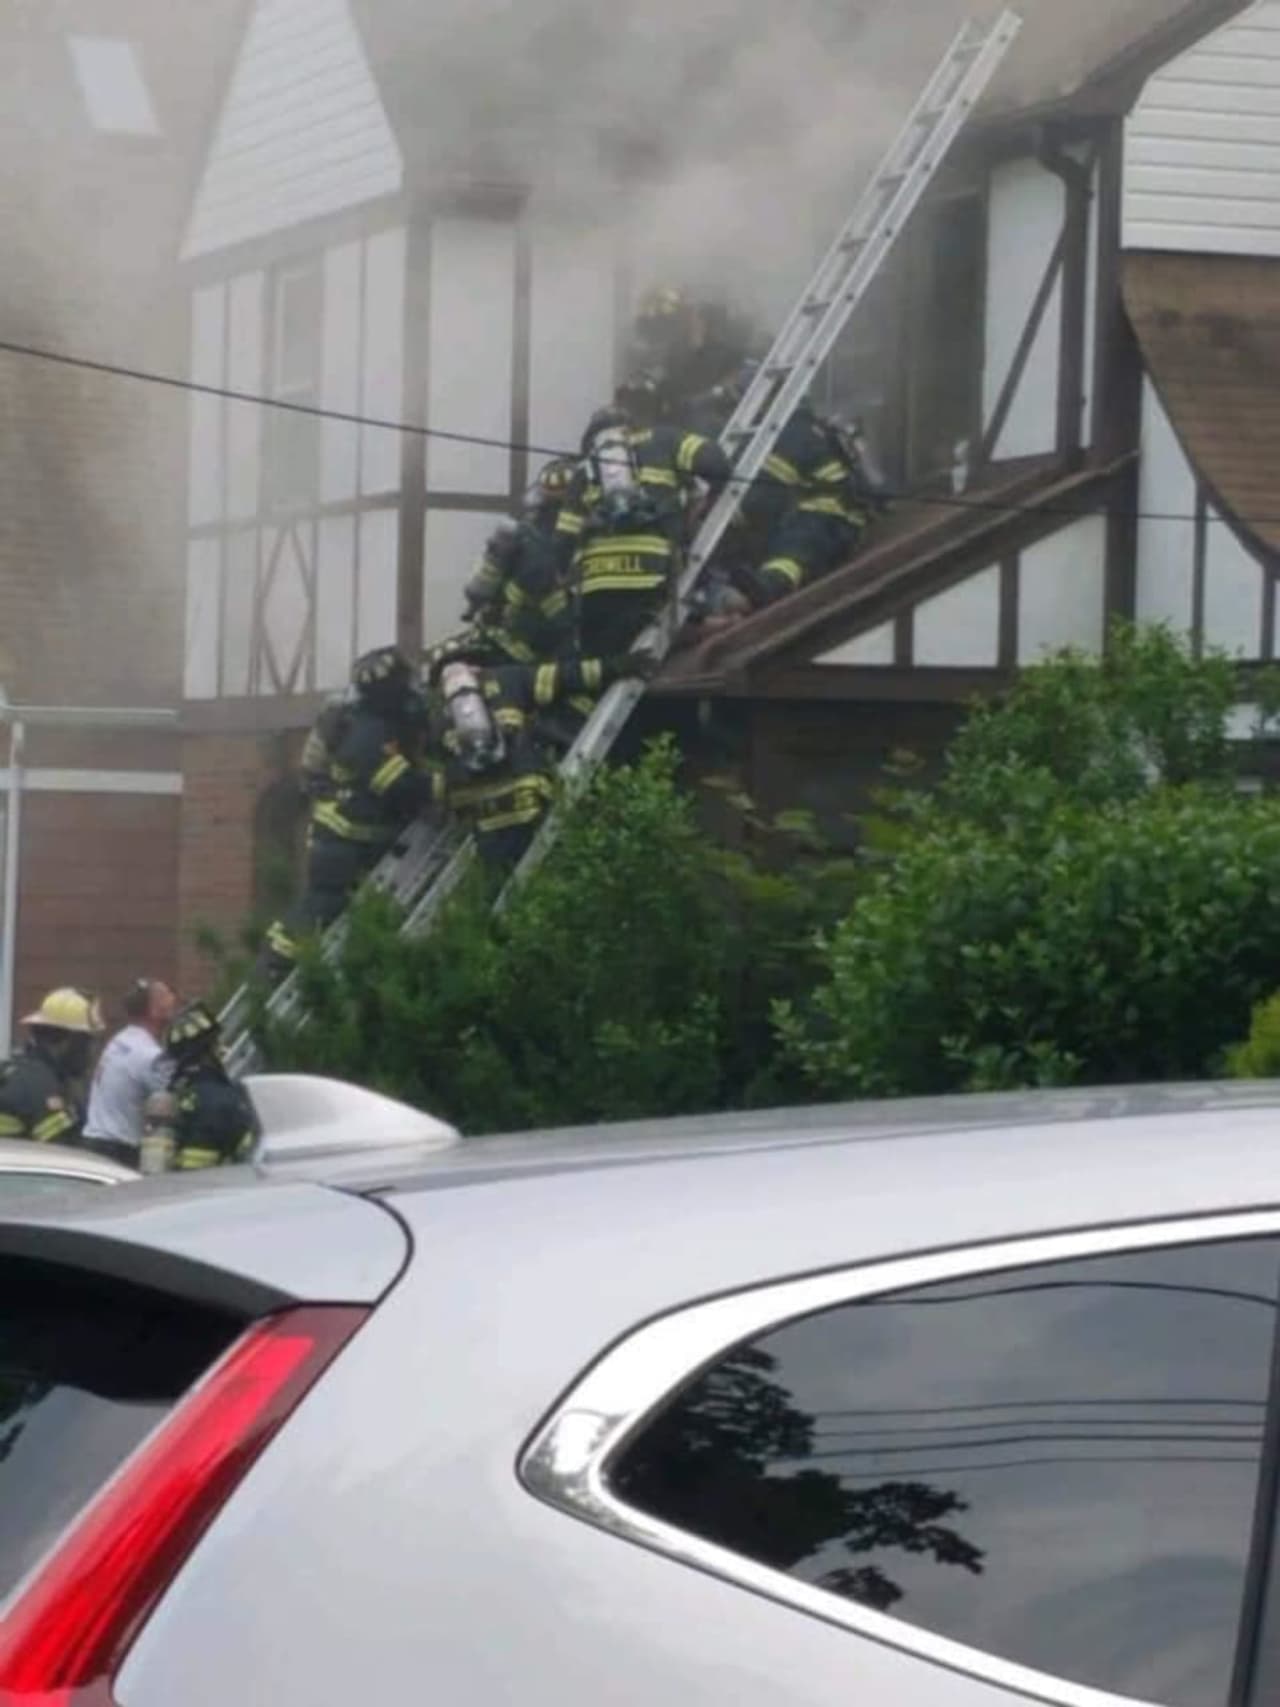 Firefighters at the scene of a deadly blaze in Millburn June 5